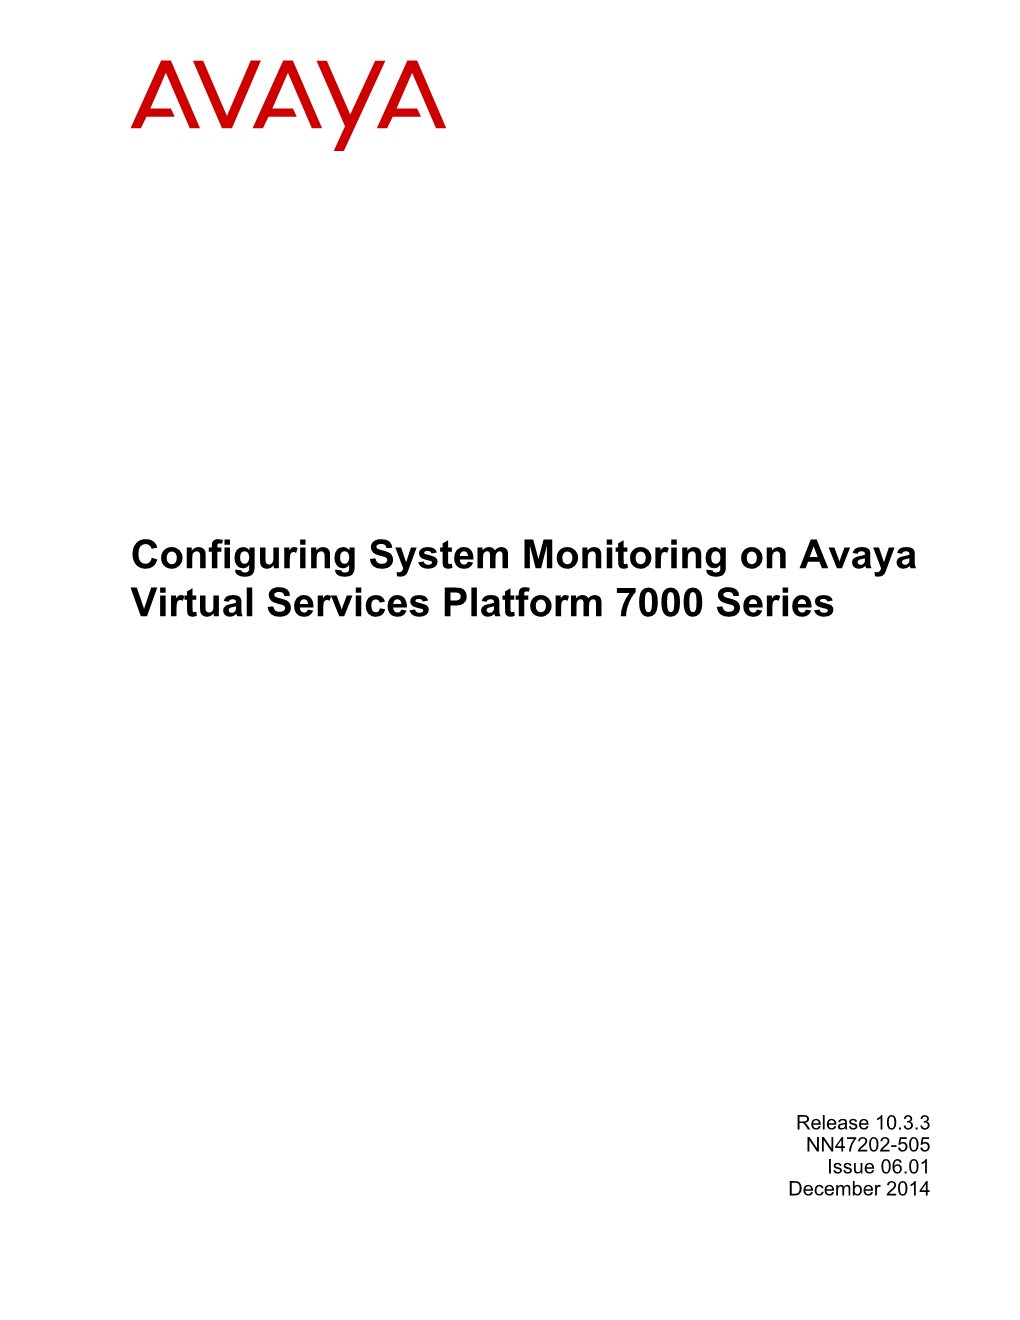 Configuring System Monitoring on Avaya Virtual Services Platform 7000 Series